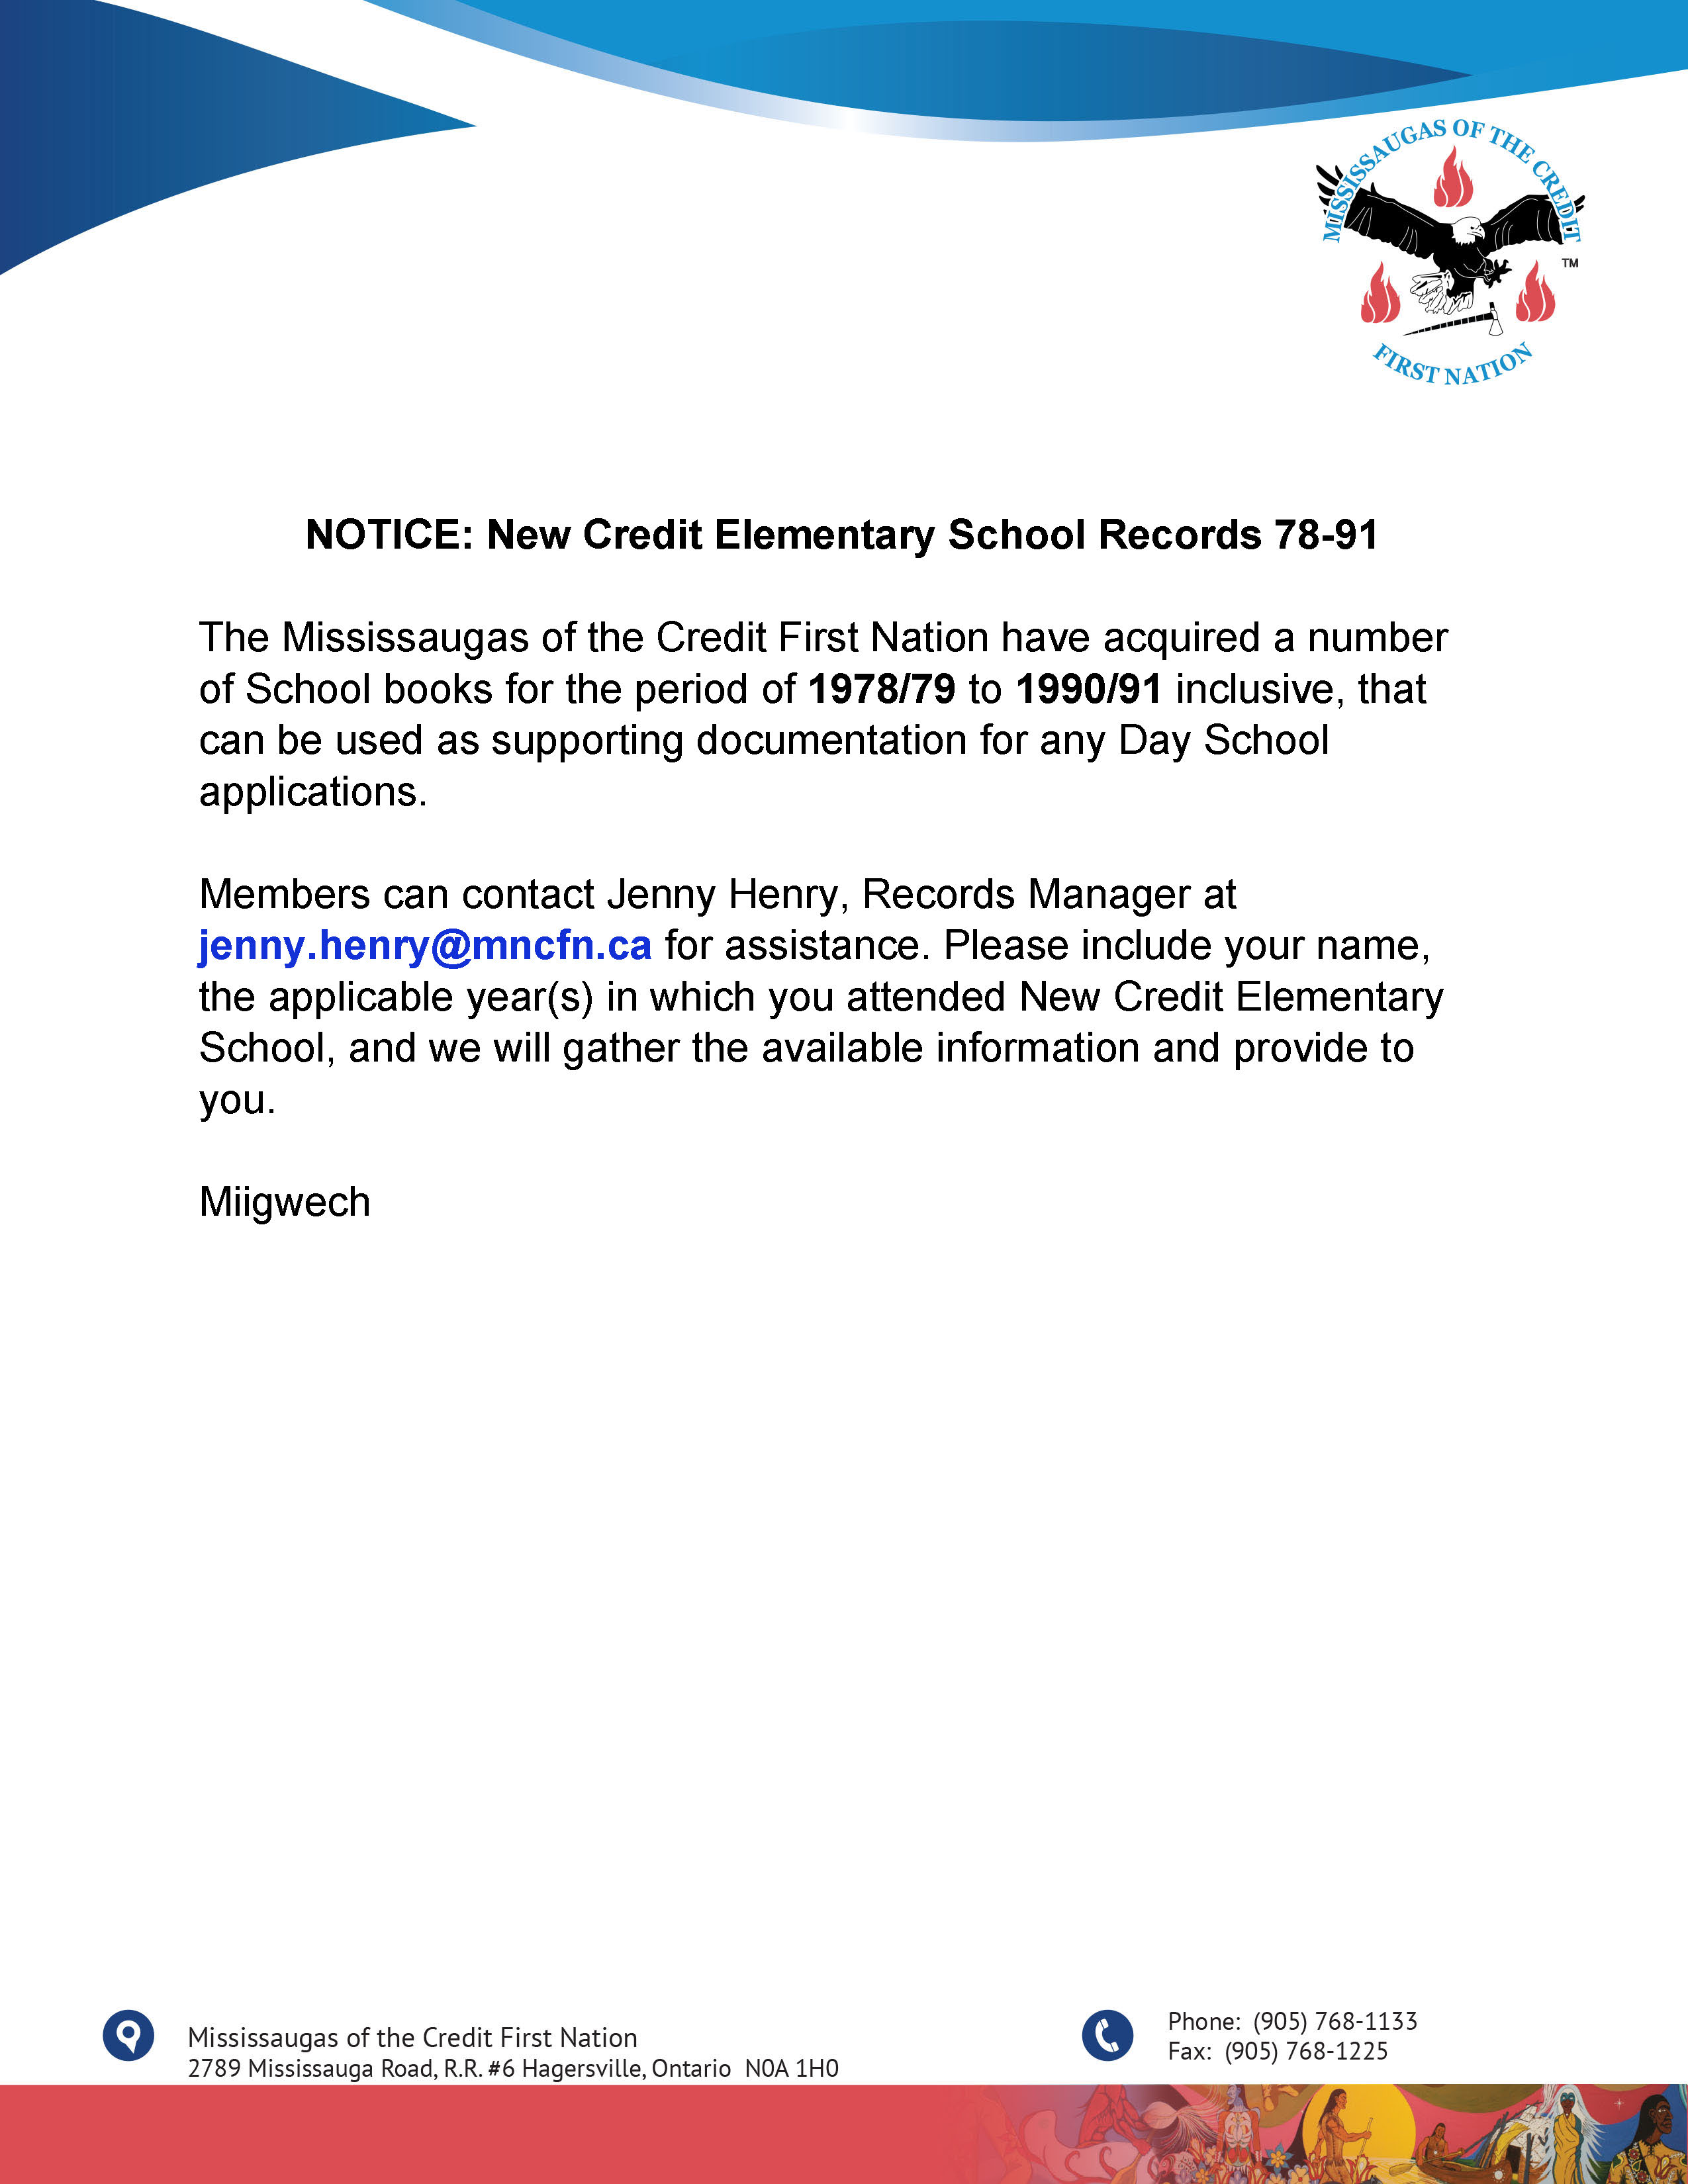 New Credit Elementary School Records – ’78-91